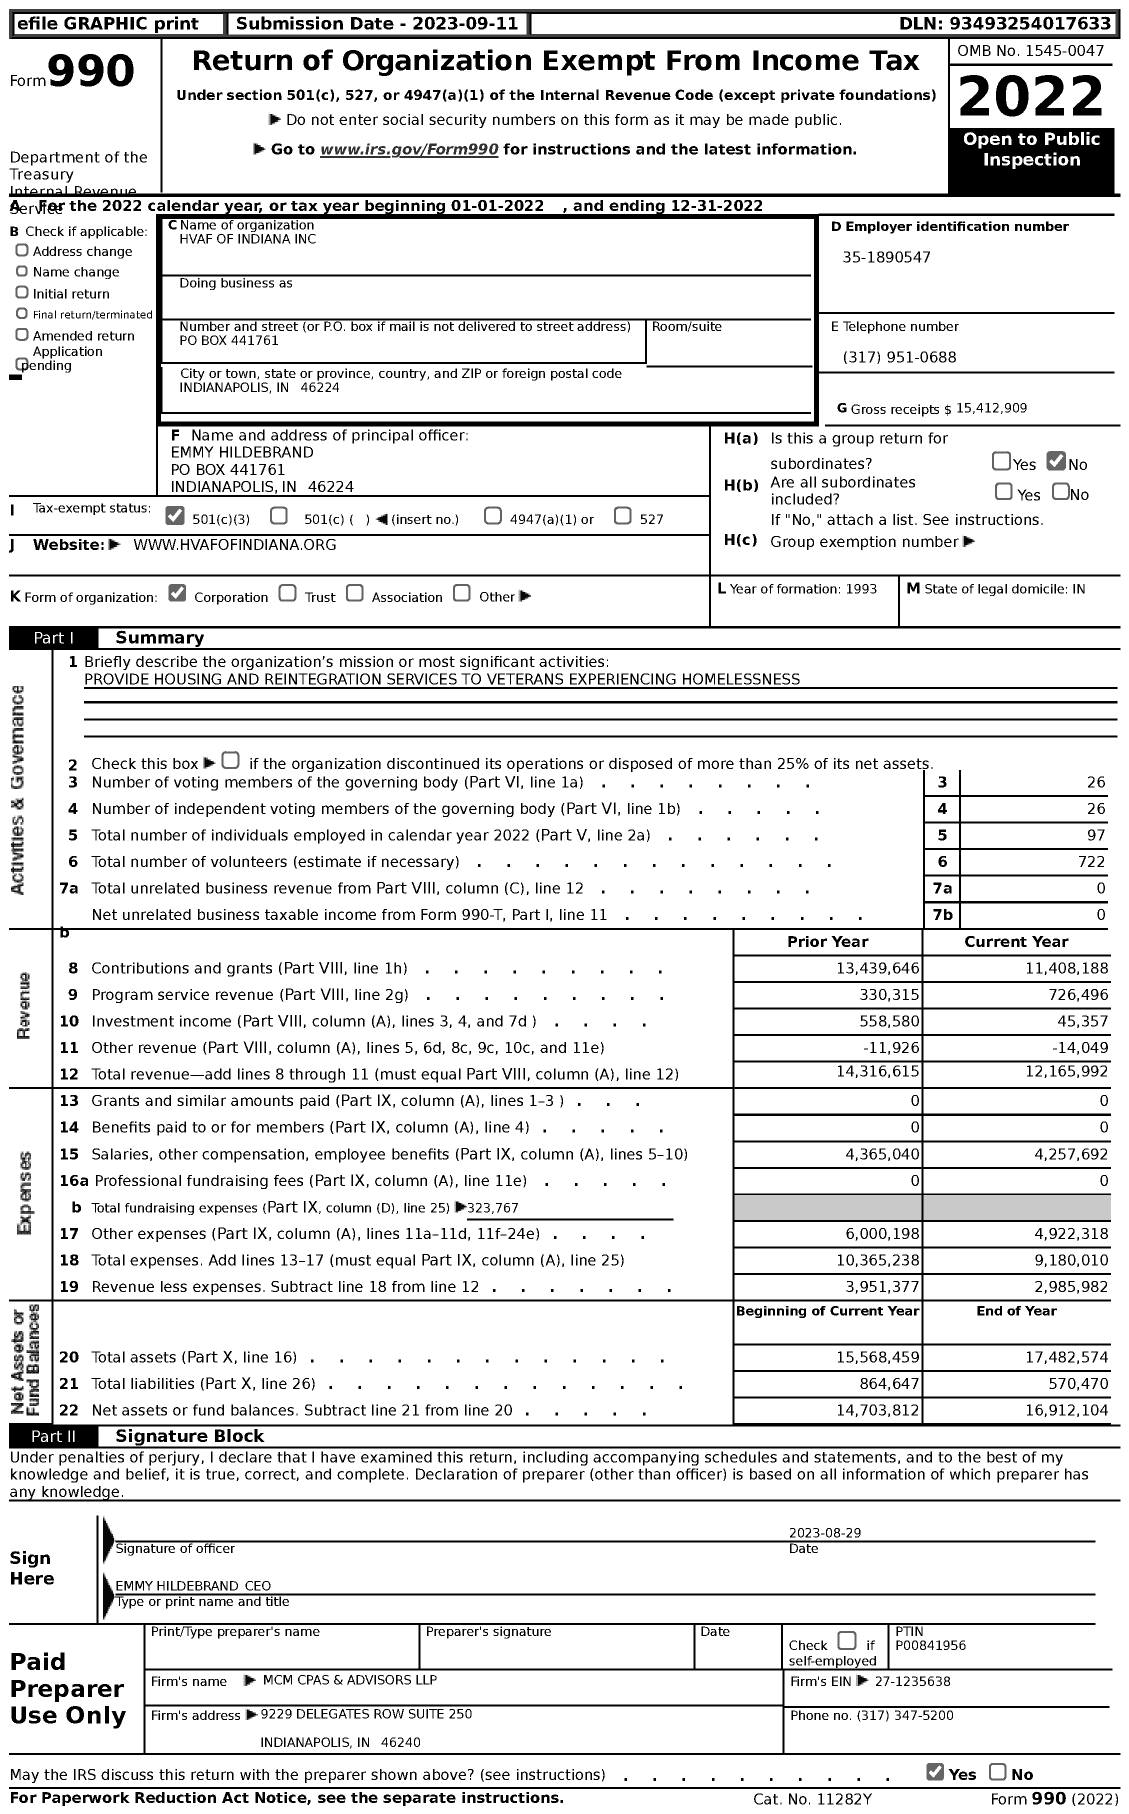 Image of first page of 2022 Form 990 for Hoosier Veterans Assistance Foundation of Indiana (HVAF)